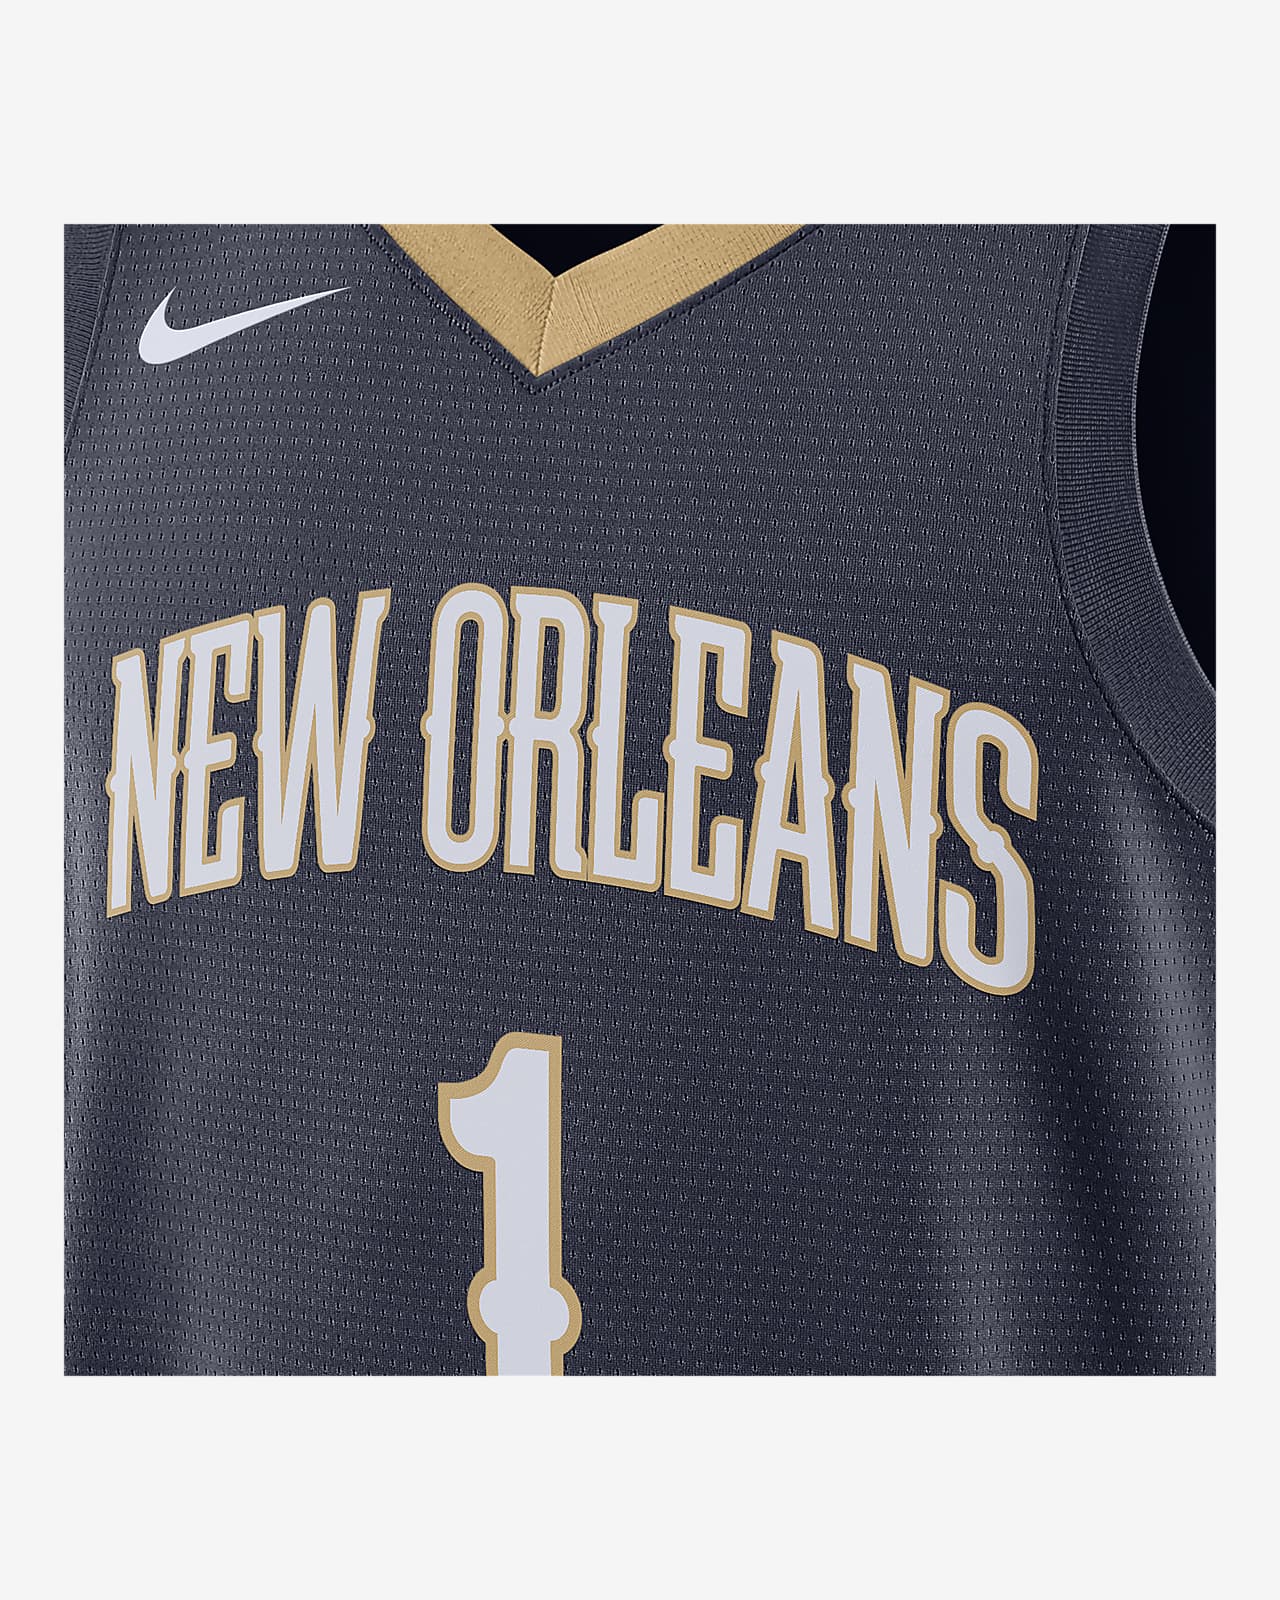 new orleans jerseys